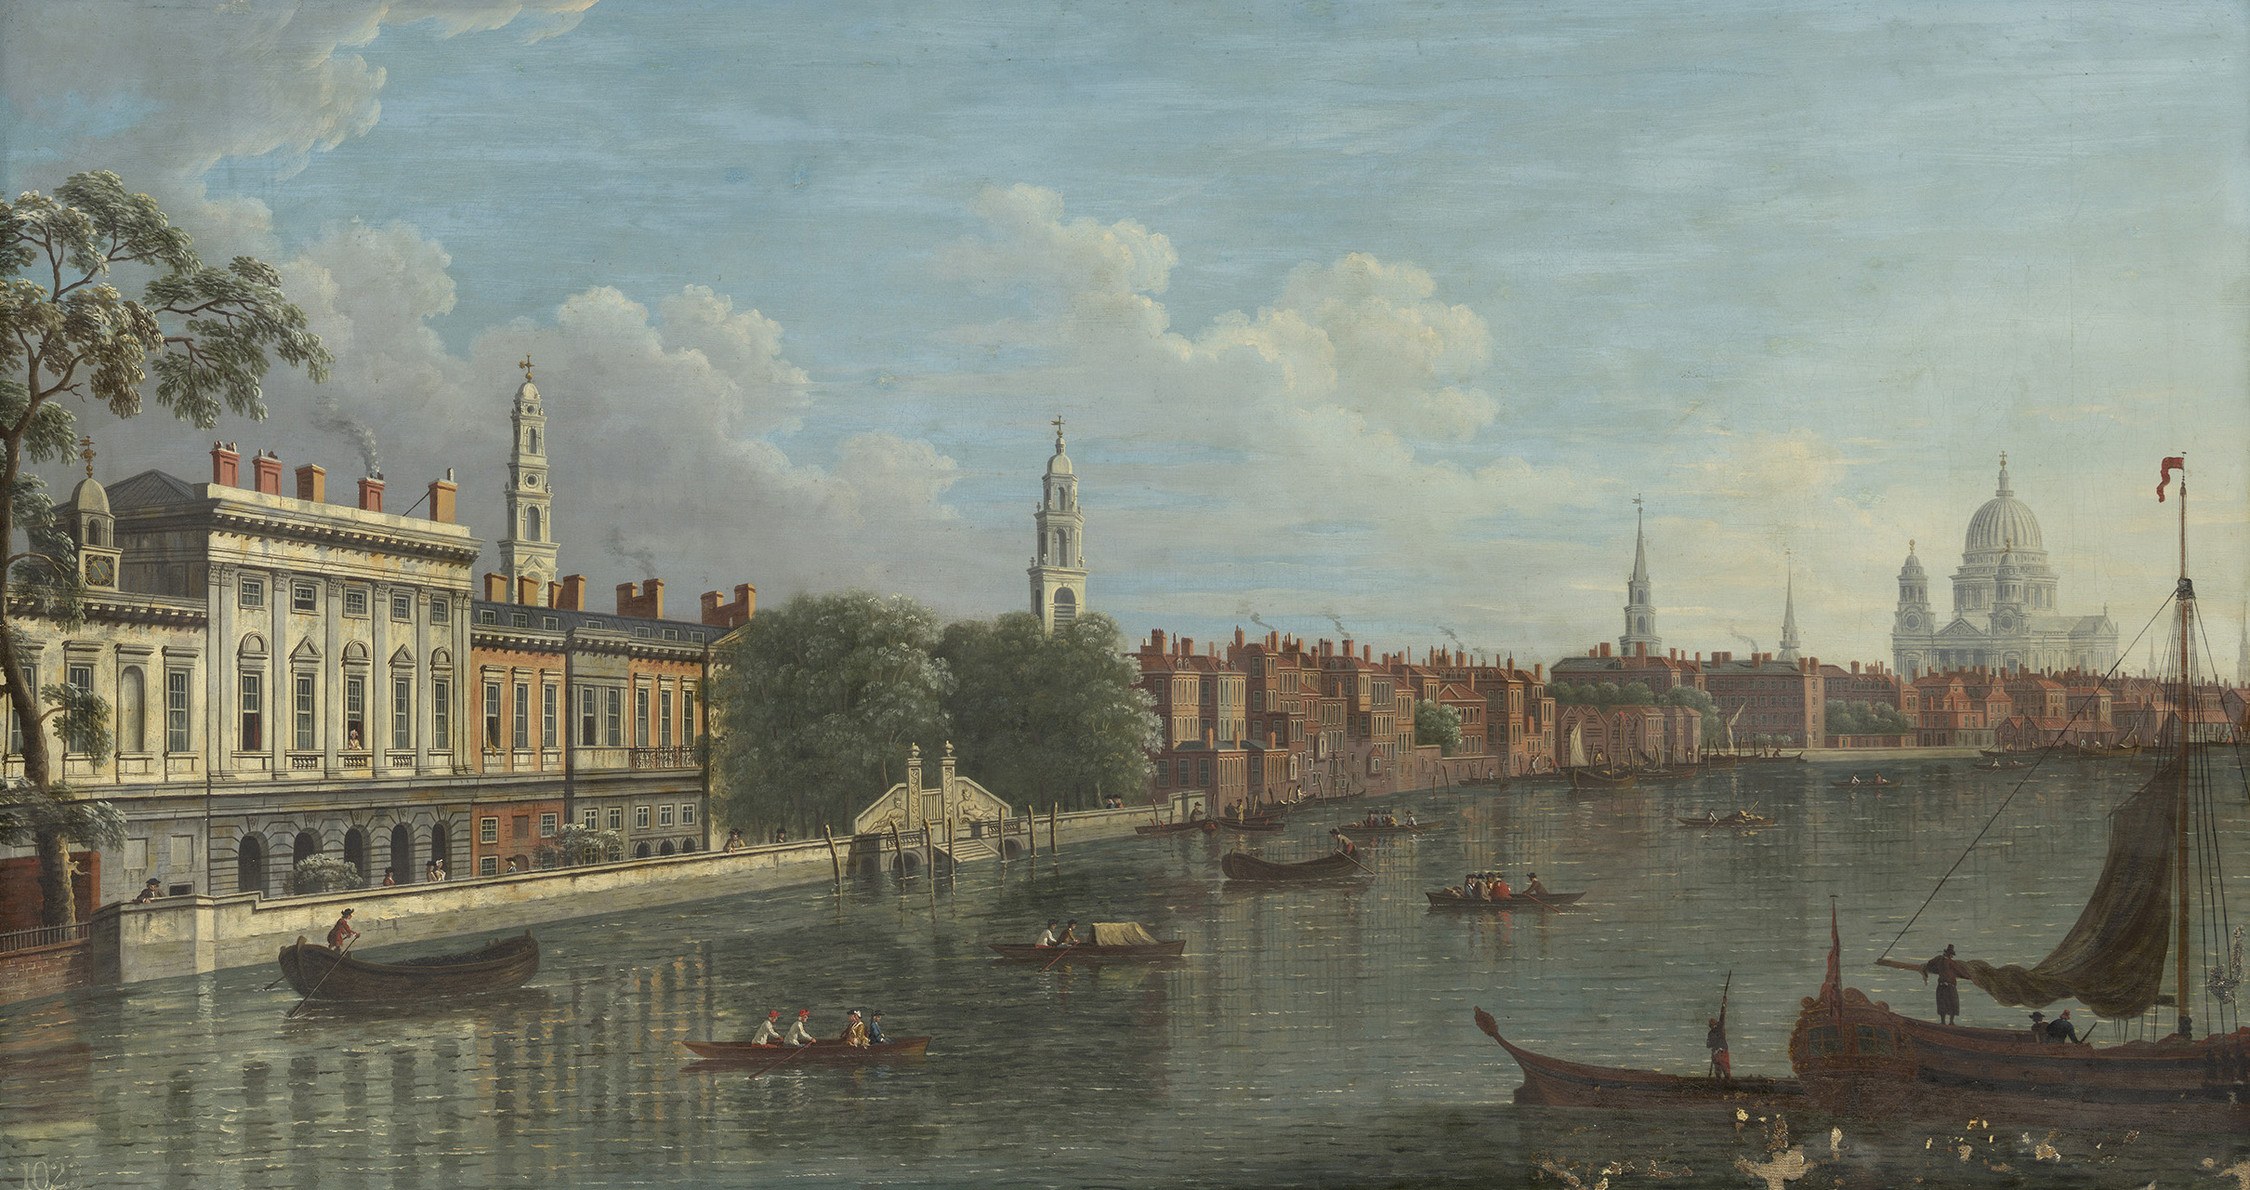 Uk 18. Каналетто художник Лондон Темза. Лондон 17 века река Темза. Лондон город Темза 19 век.